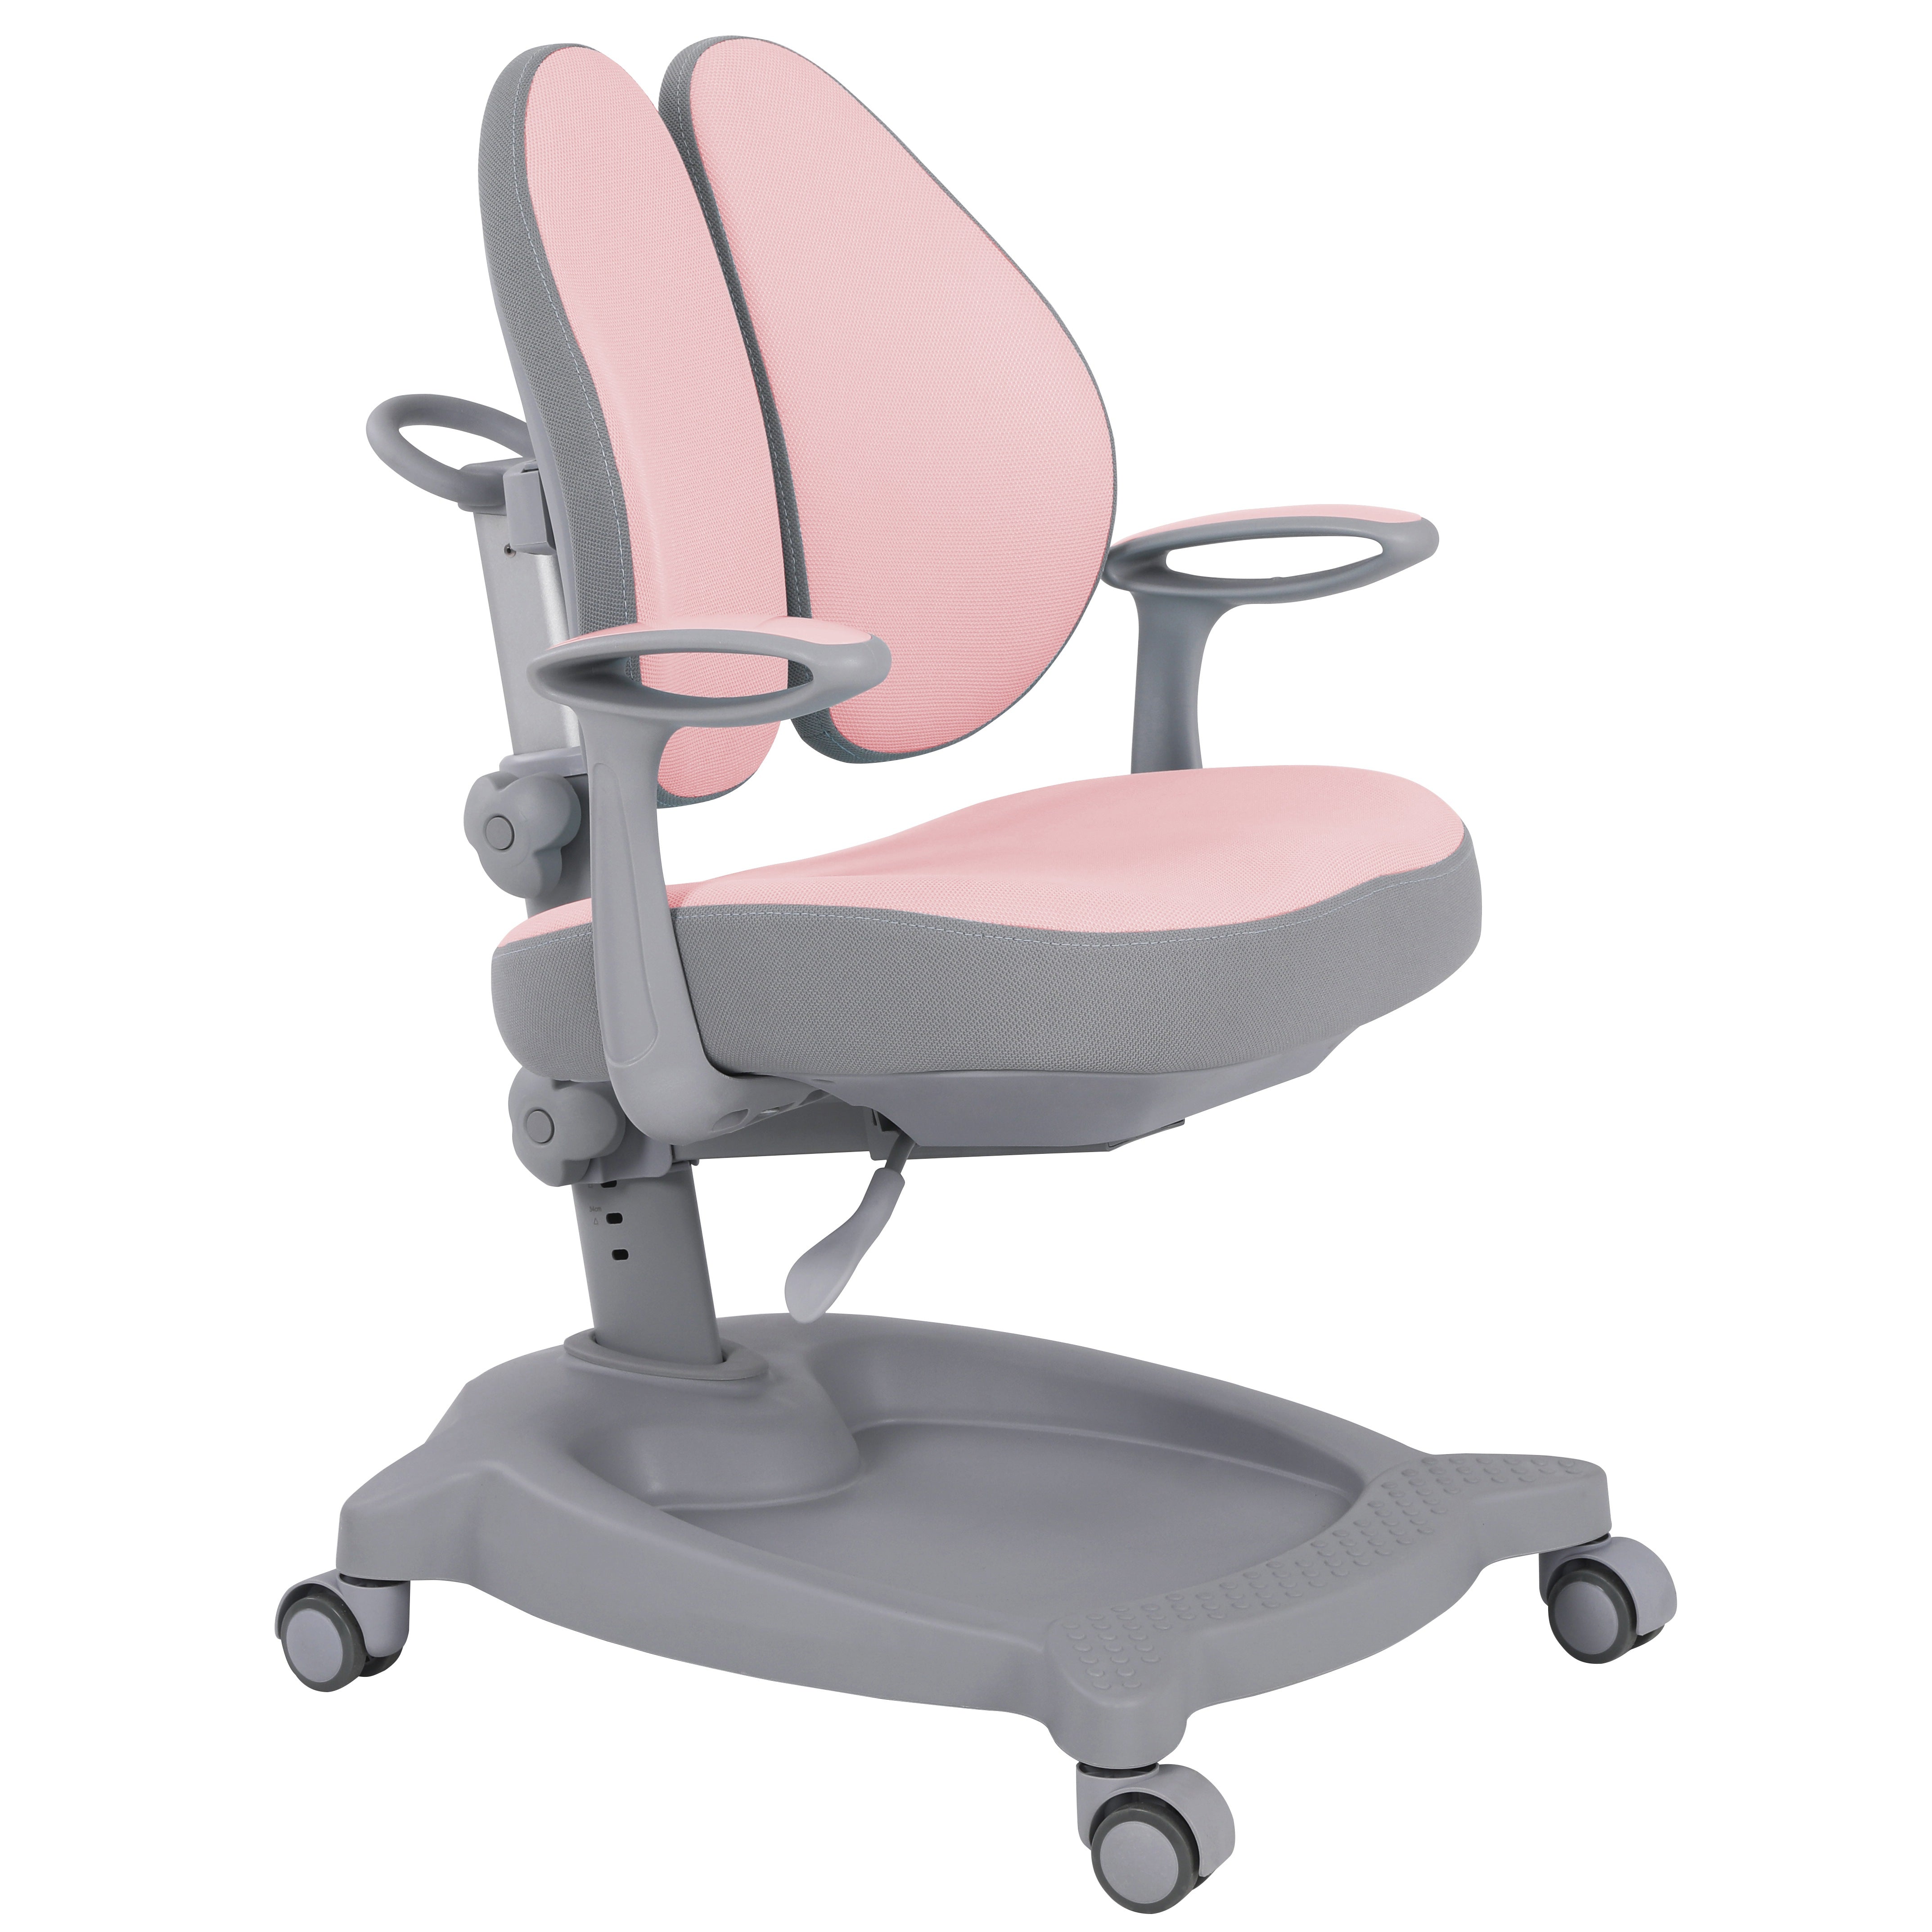 Sihoo Ergonomic Adjustable Office Chair -M57, Best4Kids